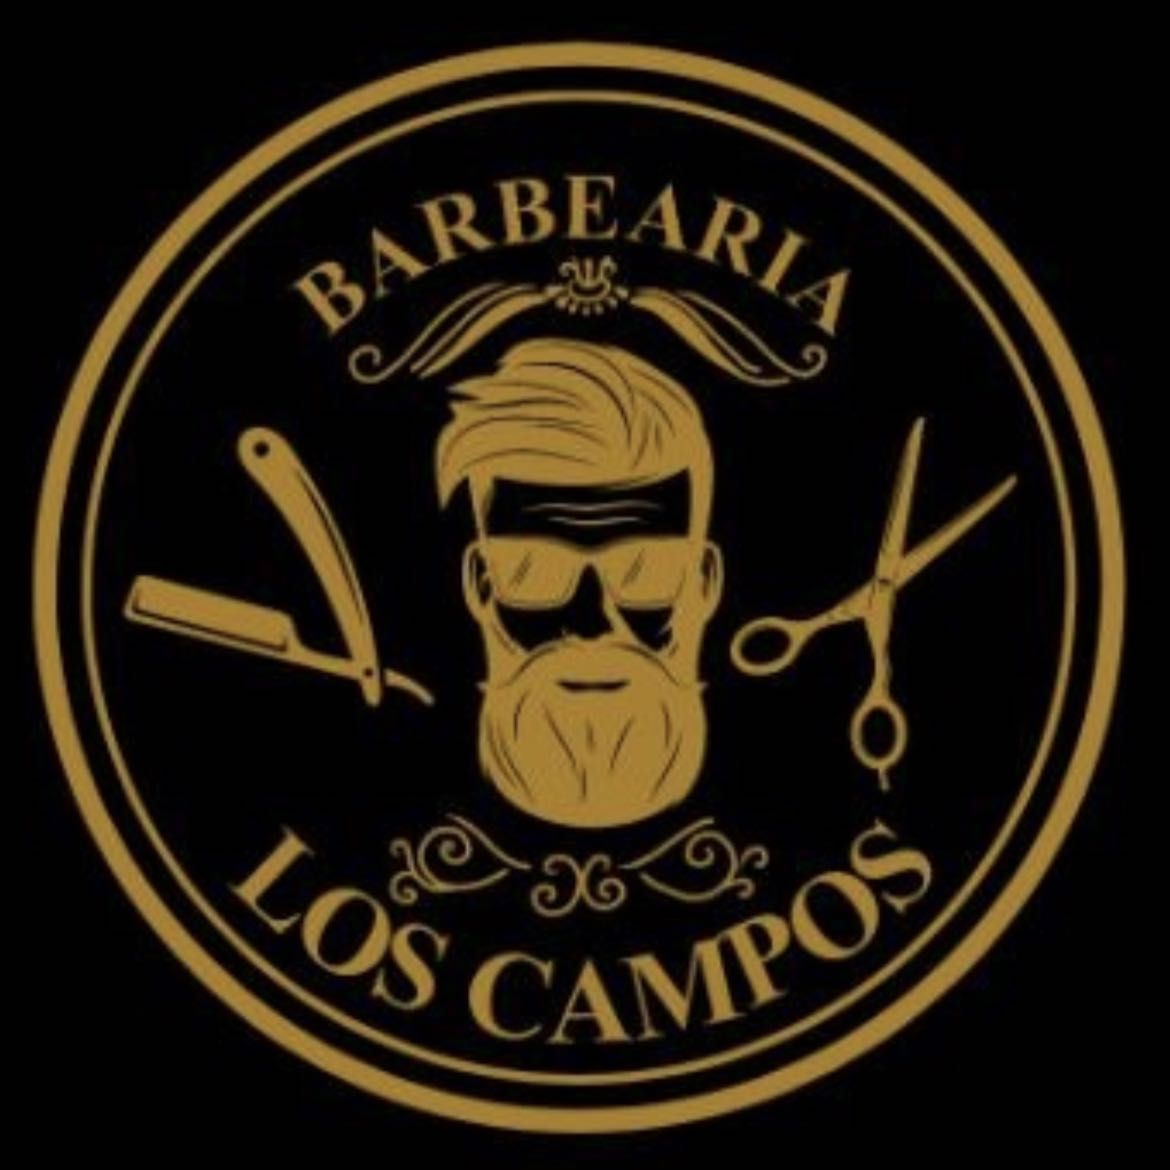 Los Campos Barbearia, Avenida Leblon,722, Jardim dos Lagos, 04771-050, São Paulo